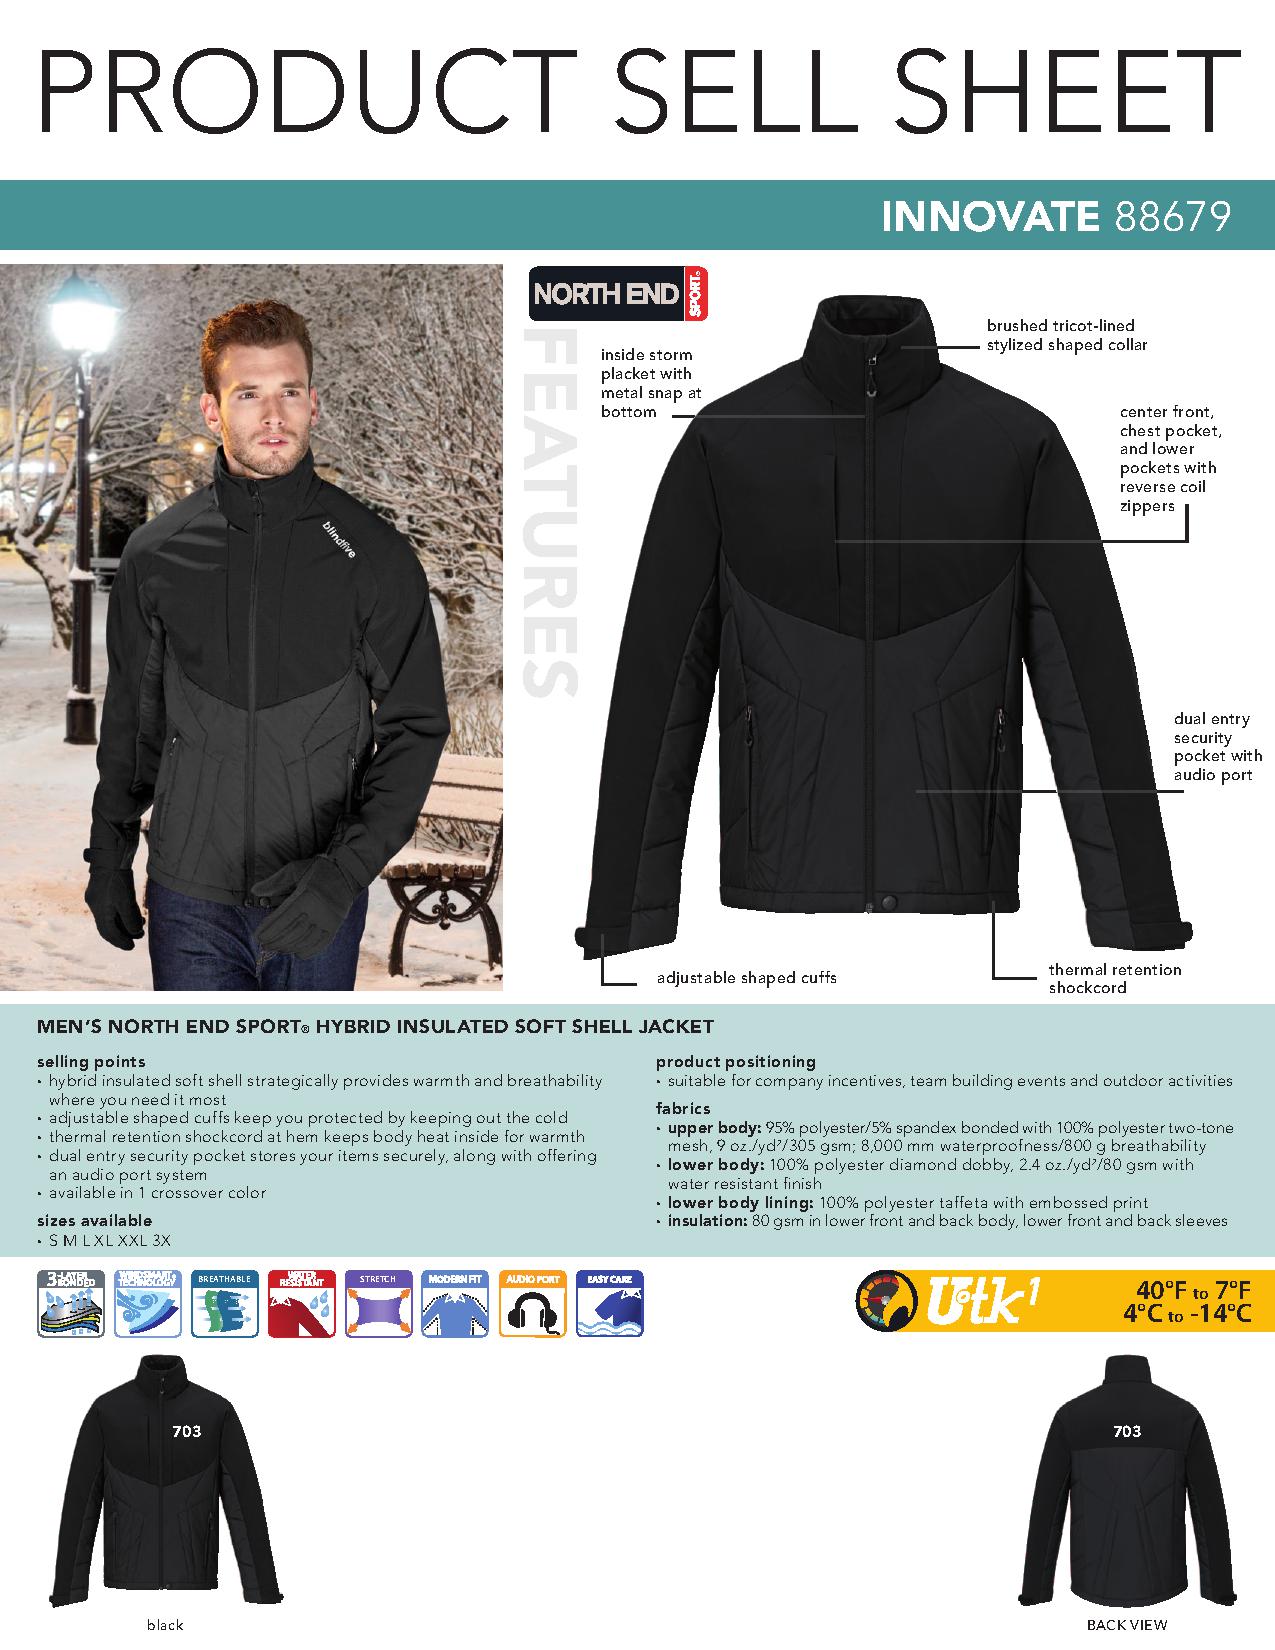 Ash City Soft Shells 88679 - Innovate Men's Hybird Insulated Soft Shell Jacket